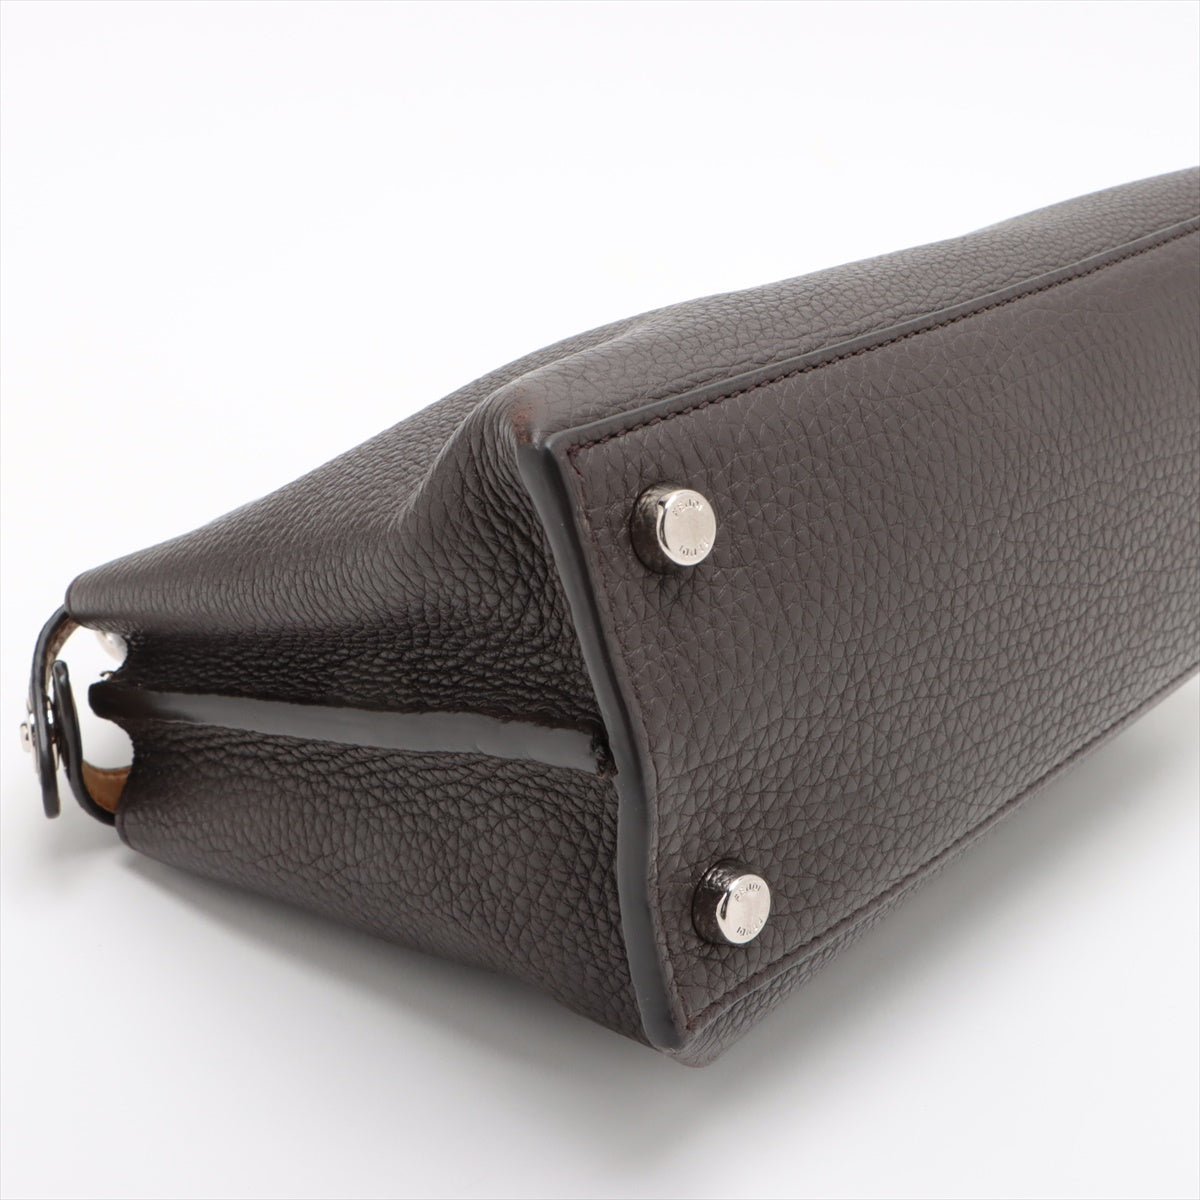 Fendi Selleria Peek-a-boo iconic Essential Leather Hand bag Brown 7VA506